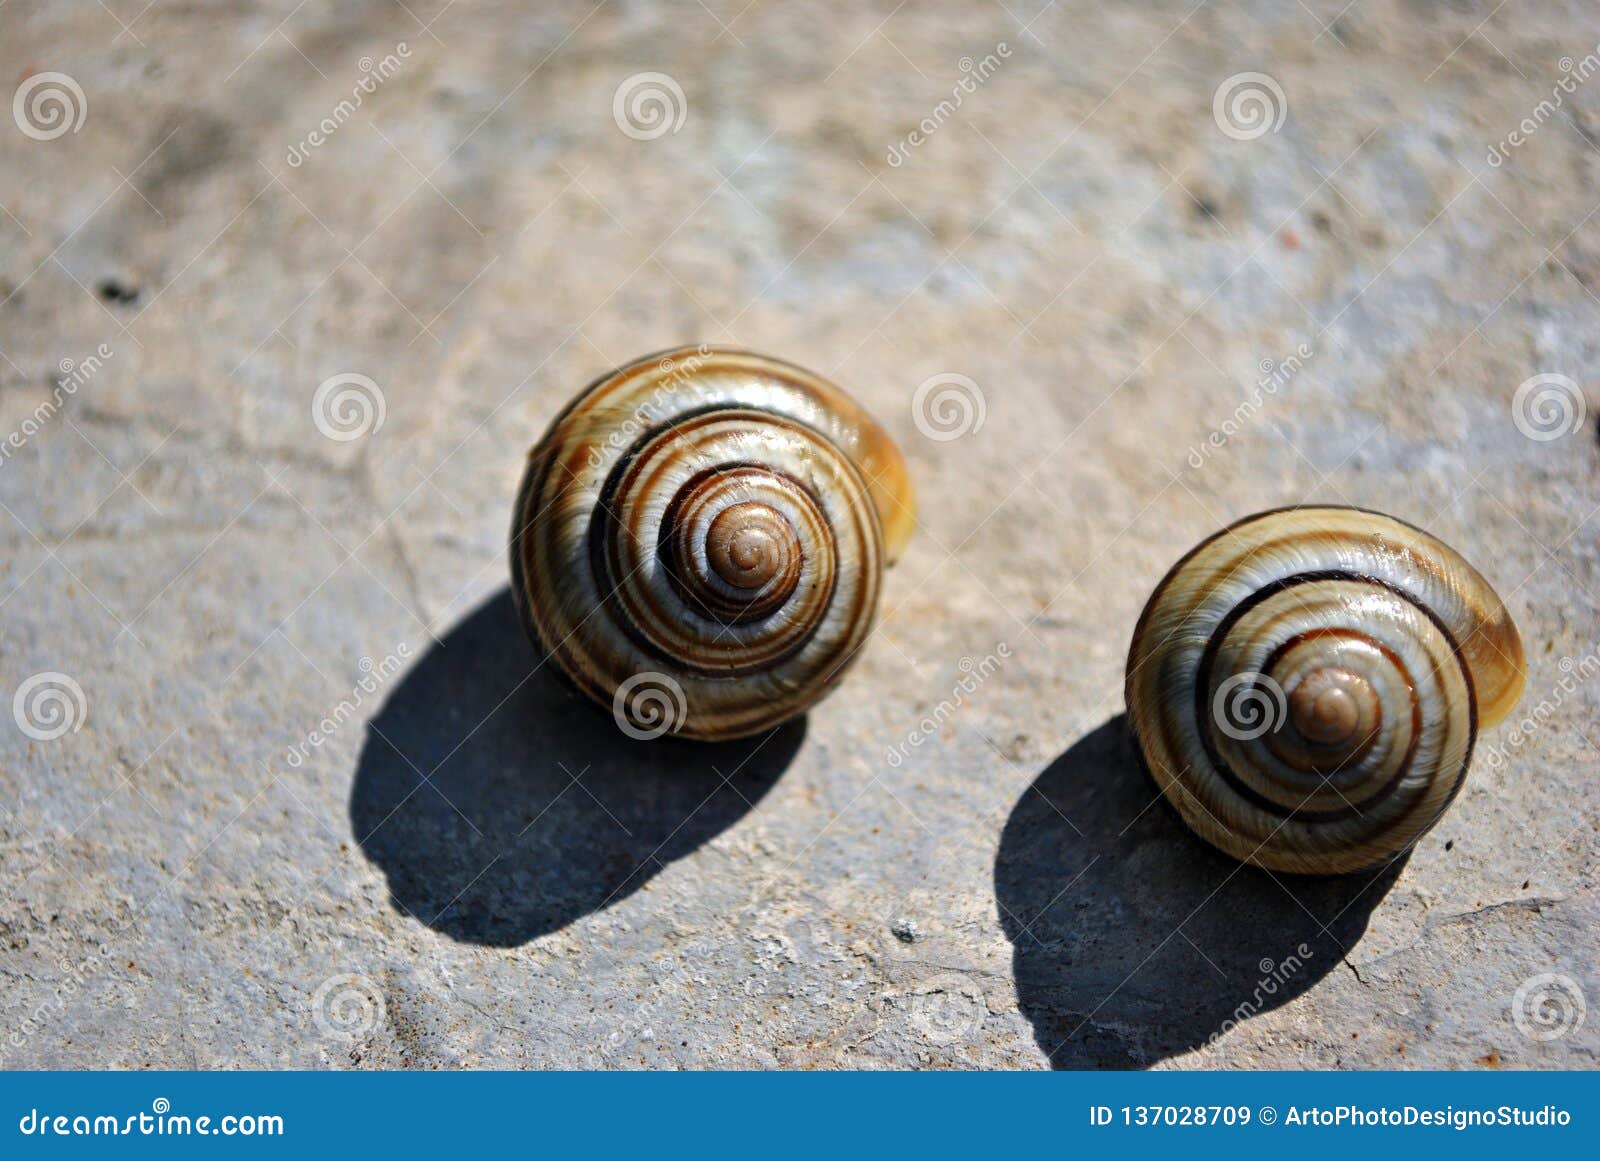 Striped Shells Of Theba Pisana White Garden Snail Sand Hill Snail White Italian Snail Grape Snail Stock Image Image Of Background Animalistic